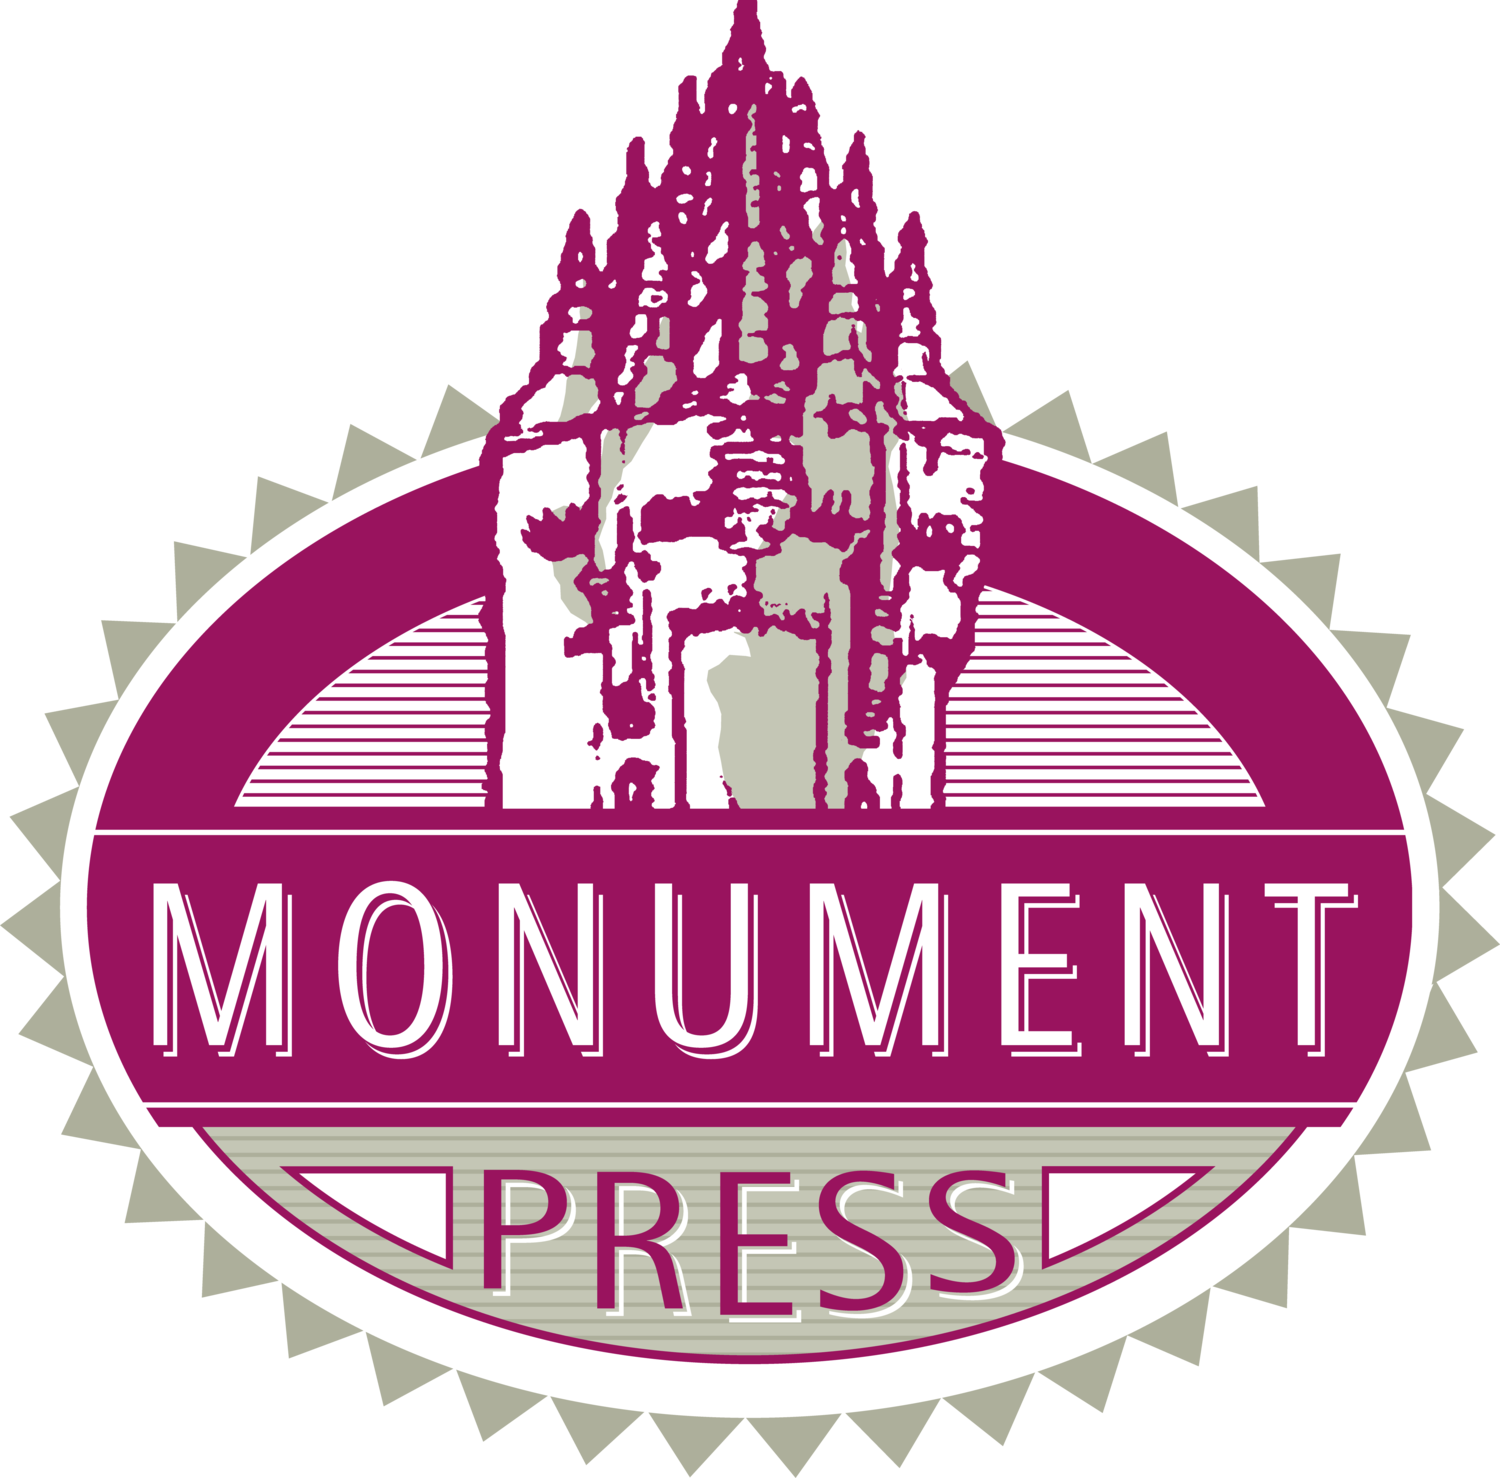 Monument Press (Stirling) Ltd